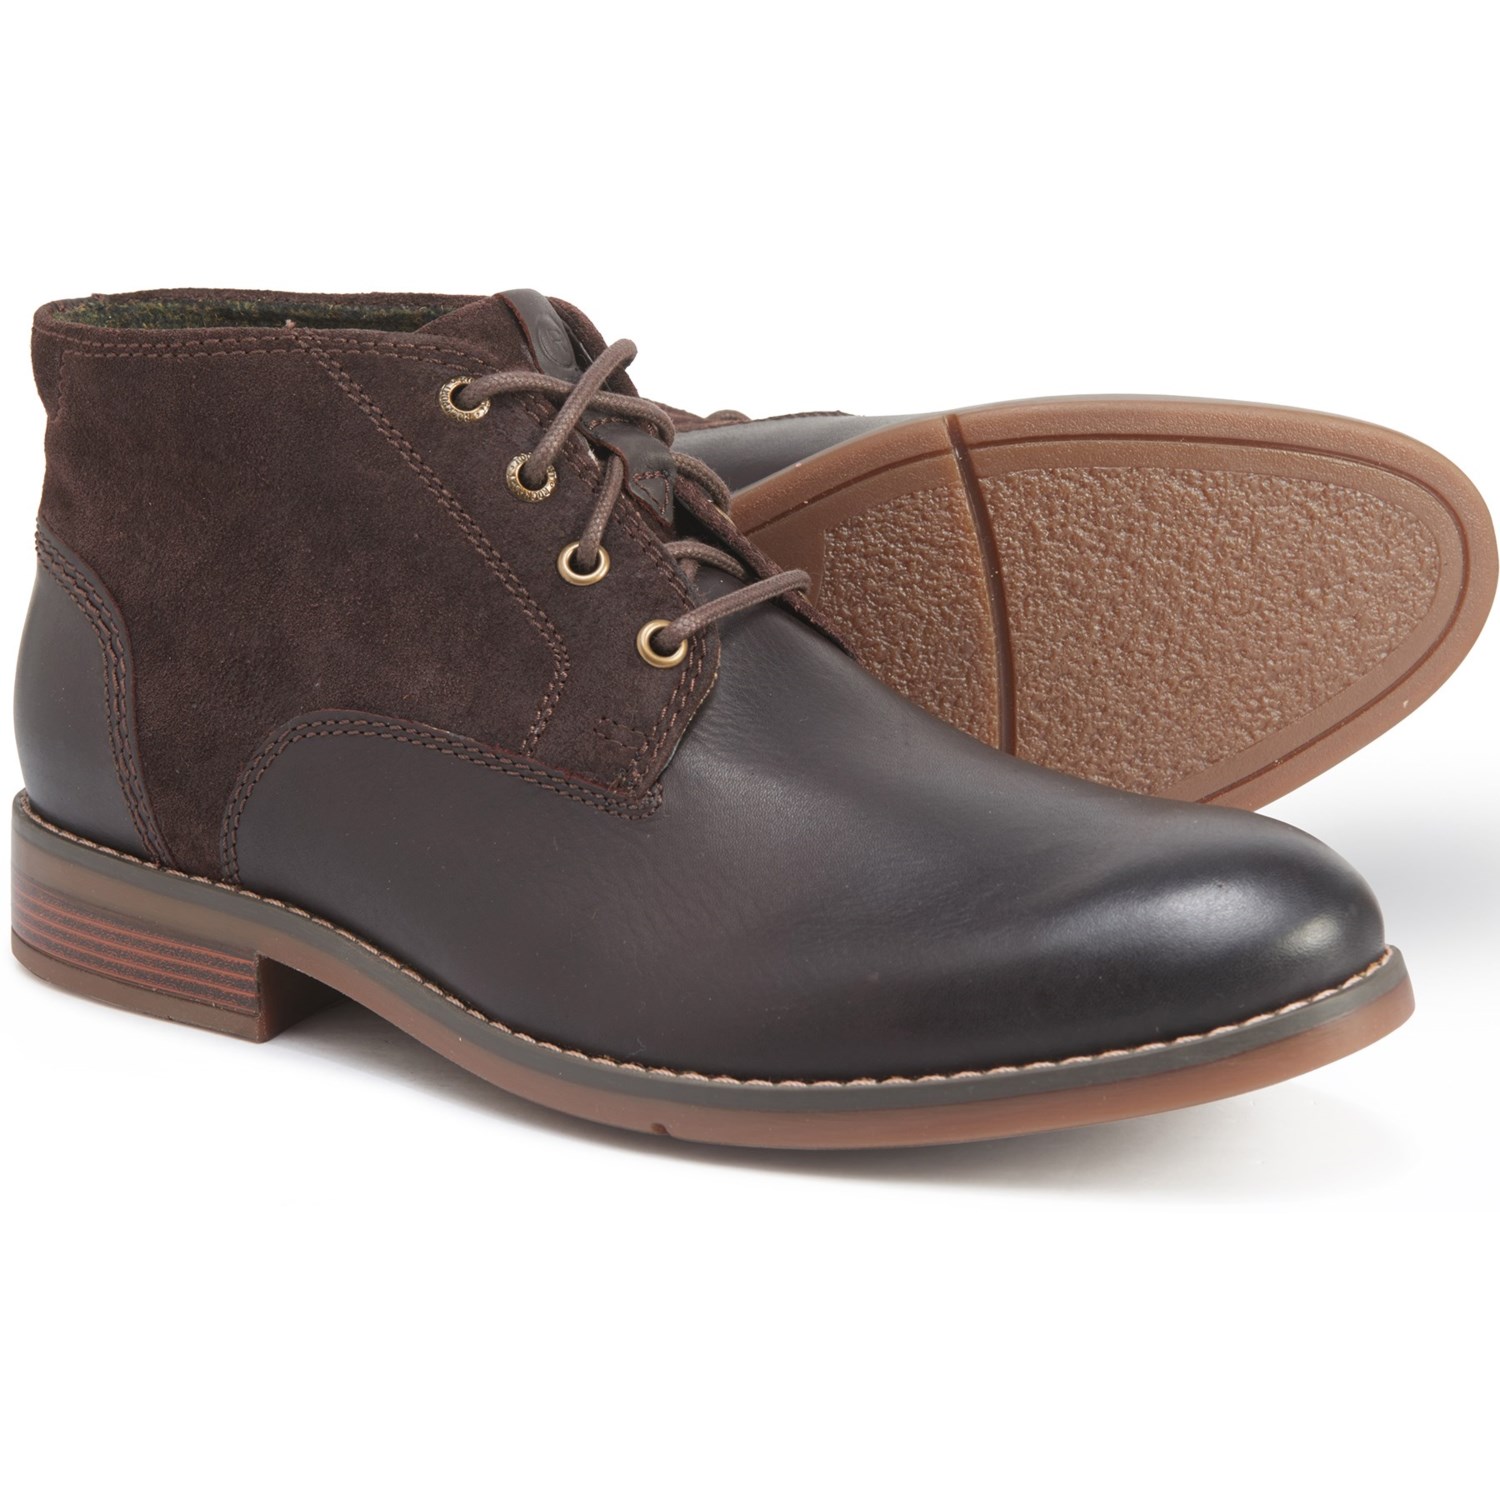 rockport leather chukka boots tan